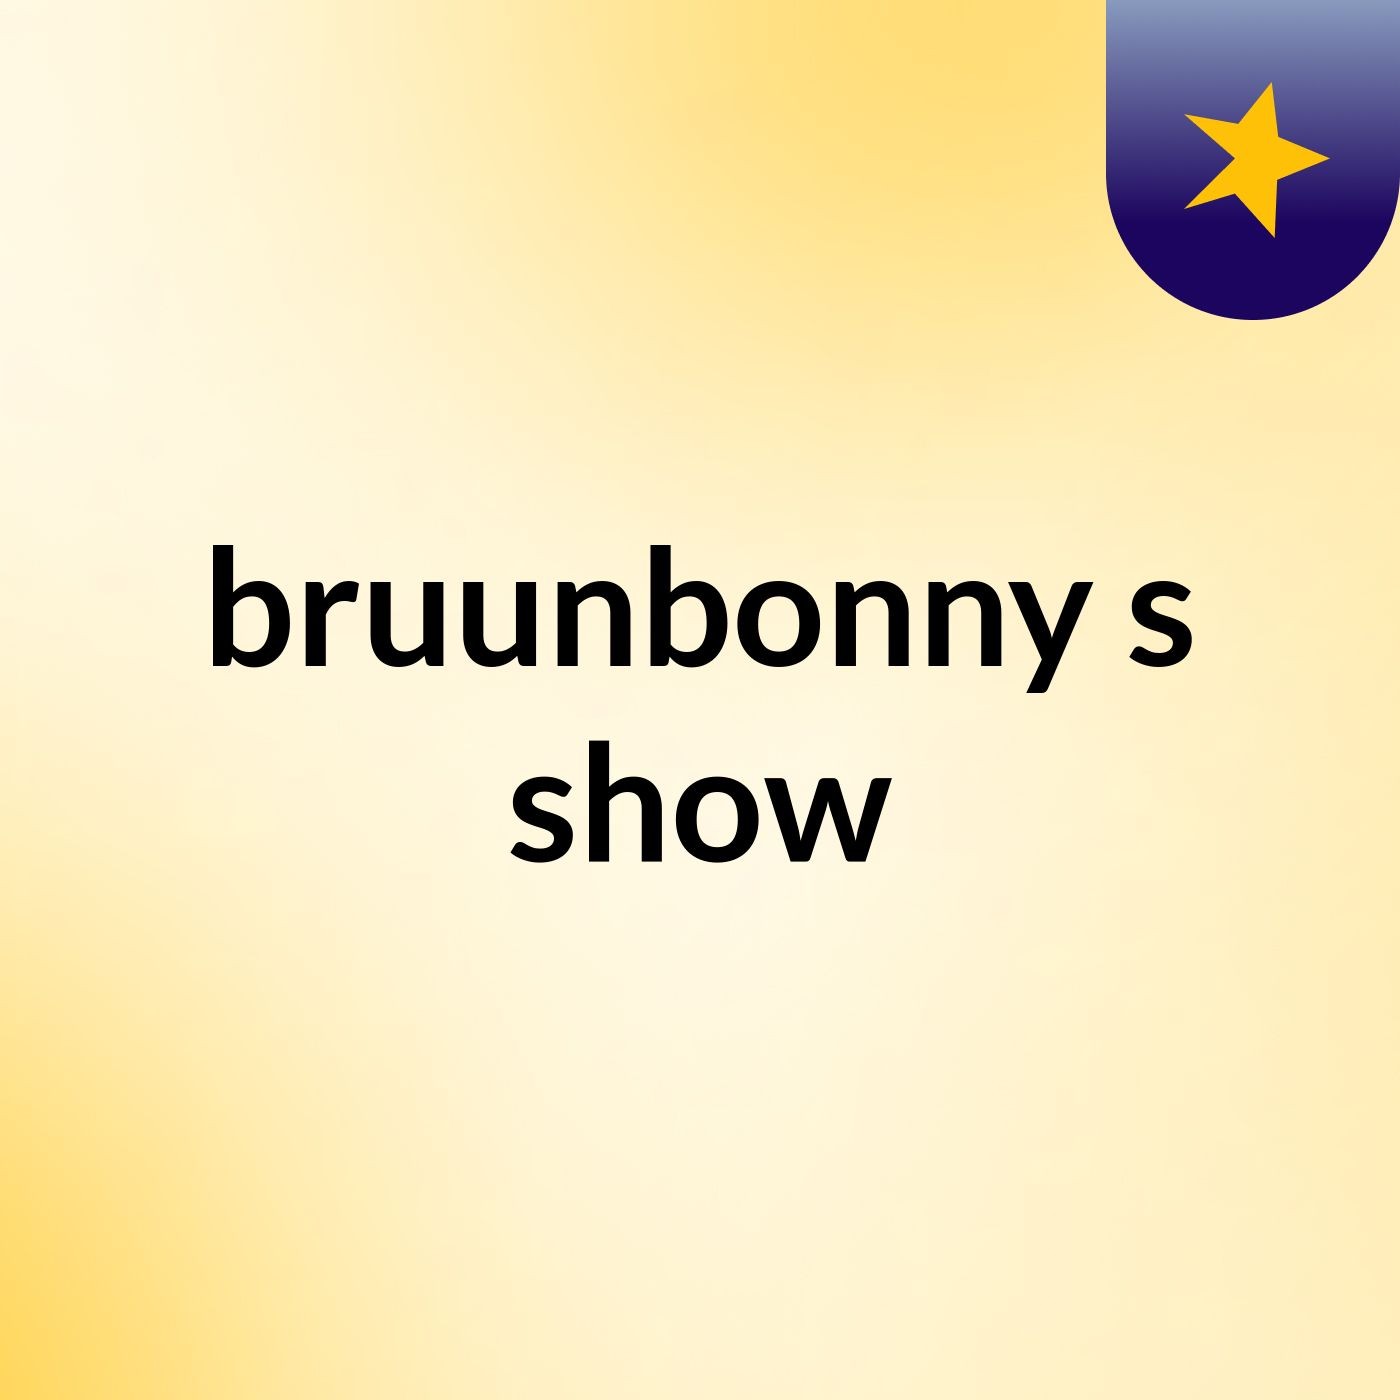 bruunbonny's show